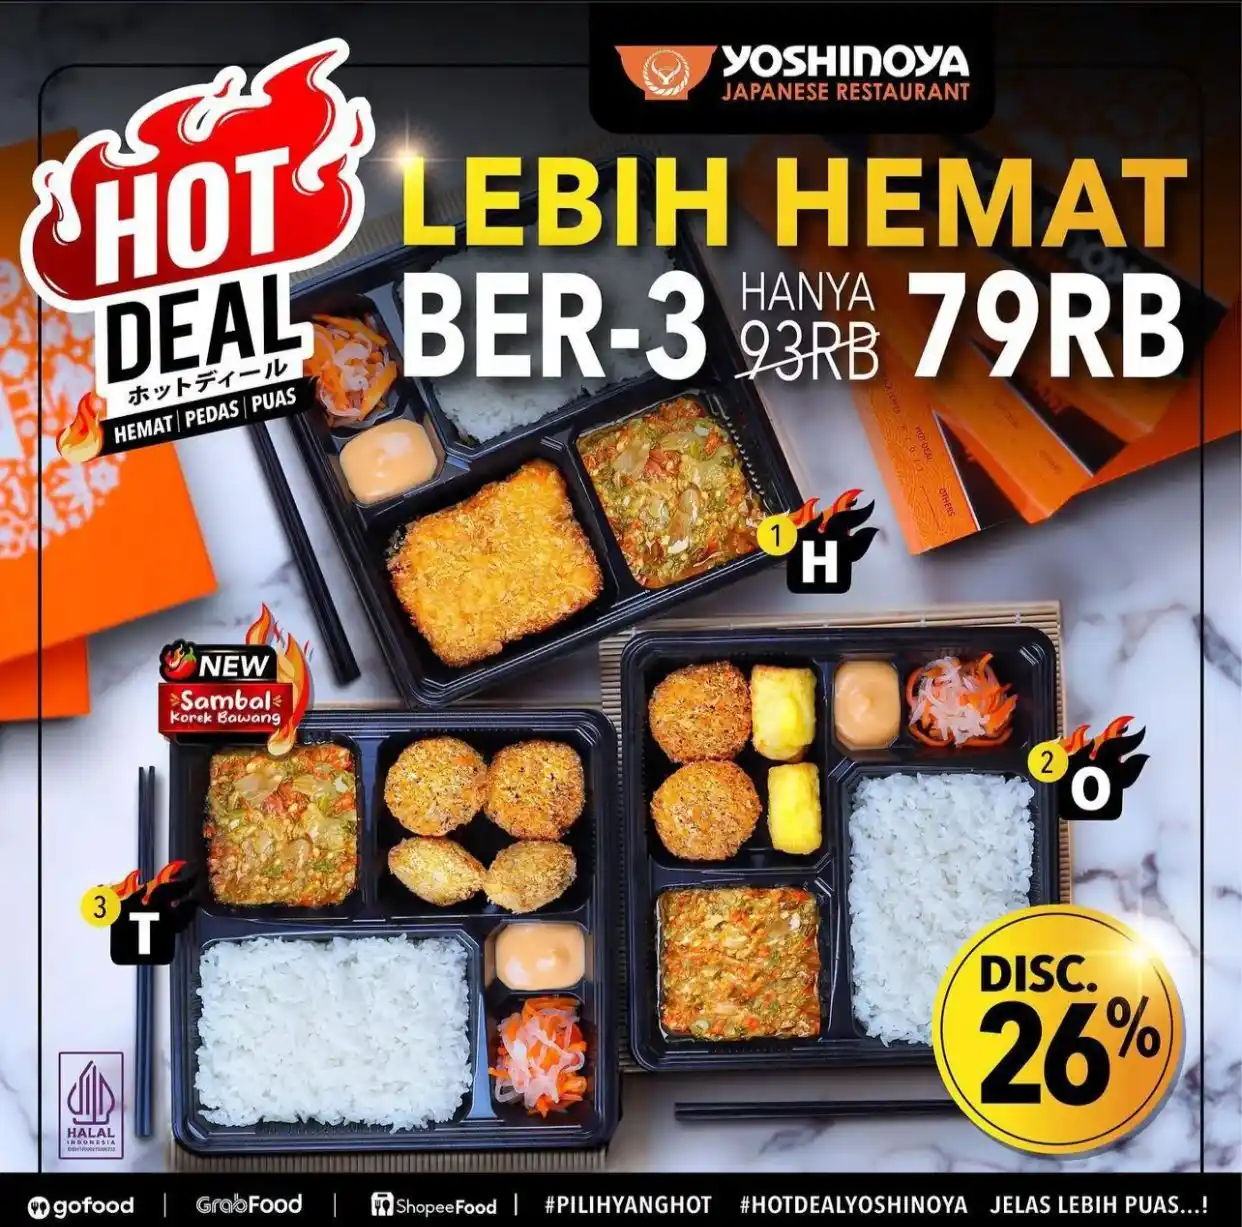 Promo Yoshinoya Hot Deal, Lebih Hemat Makan Ber-3!